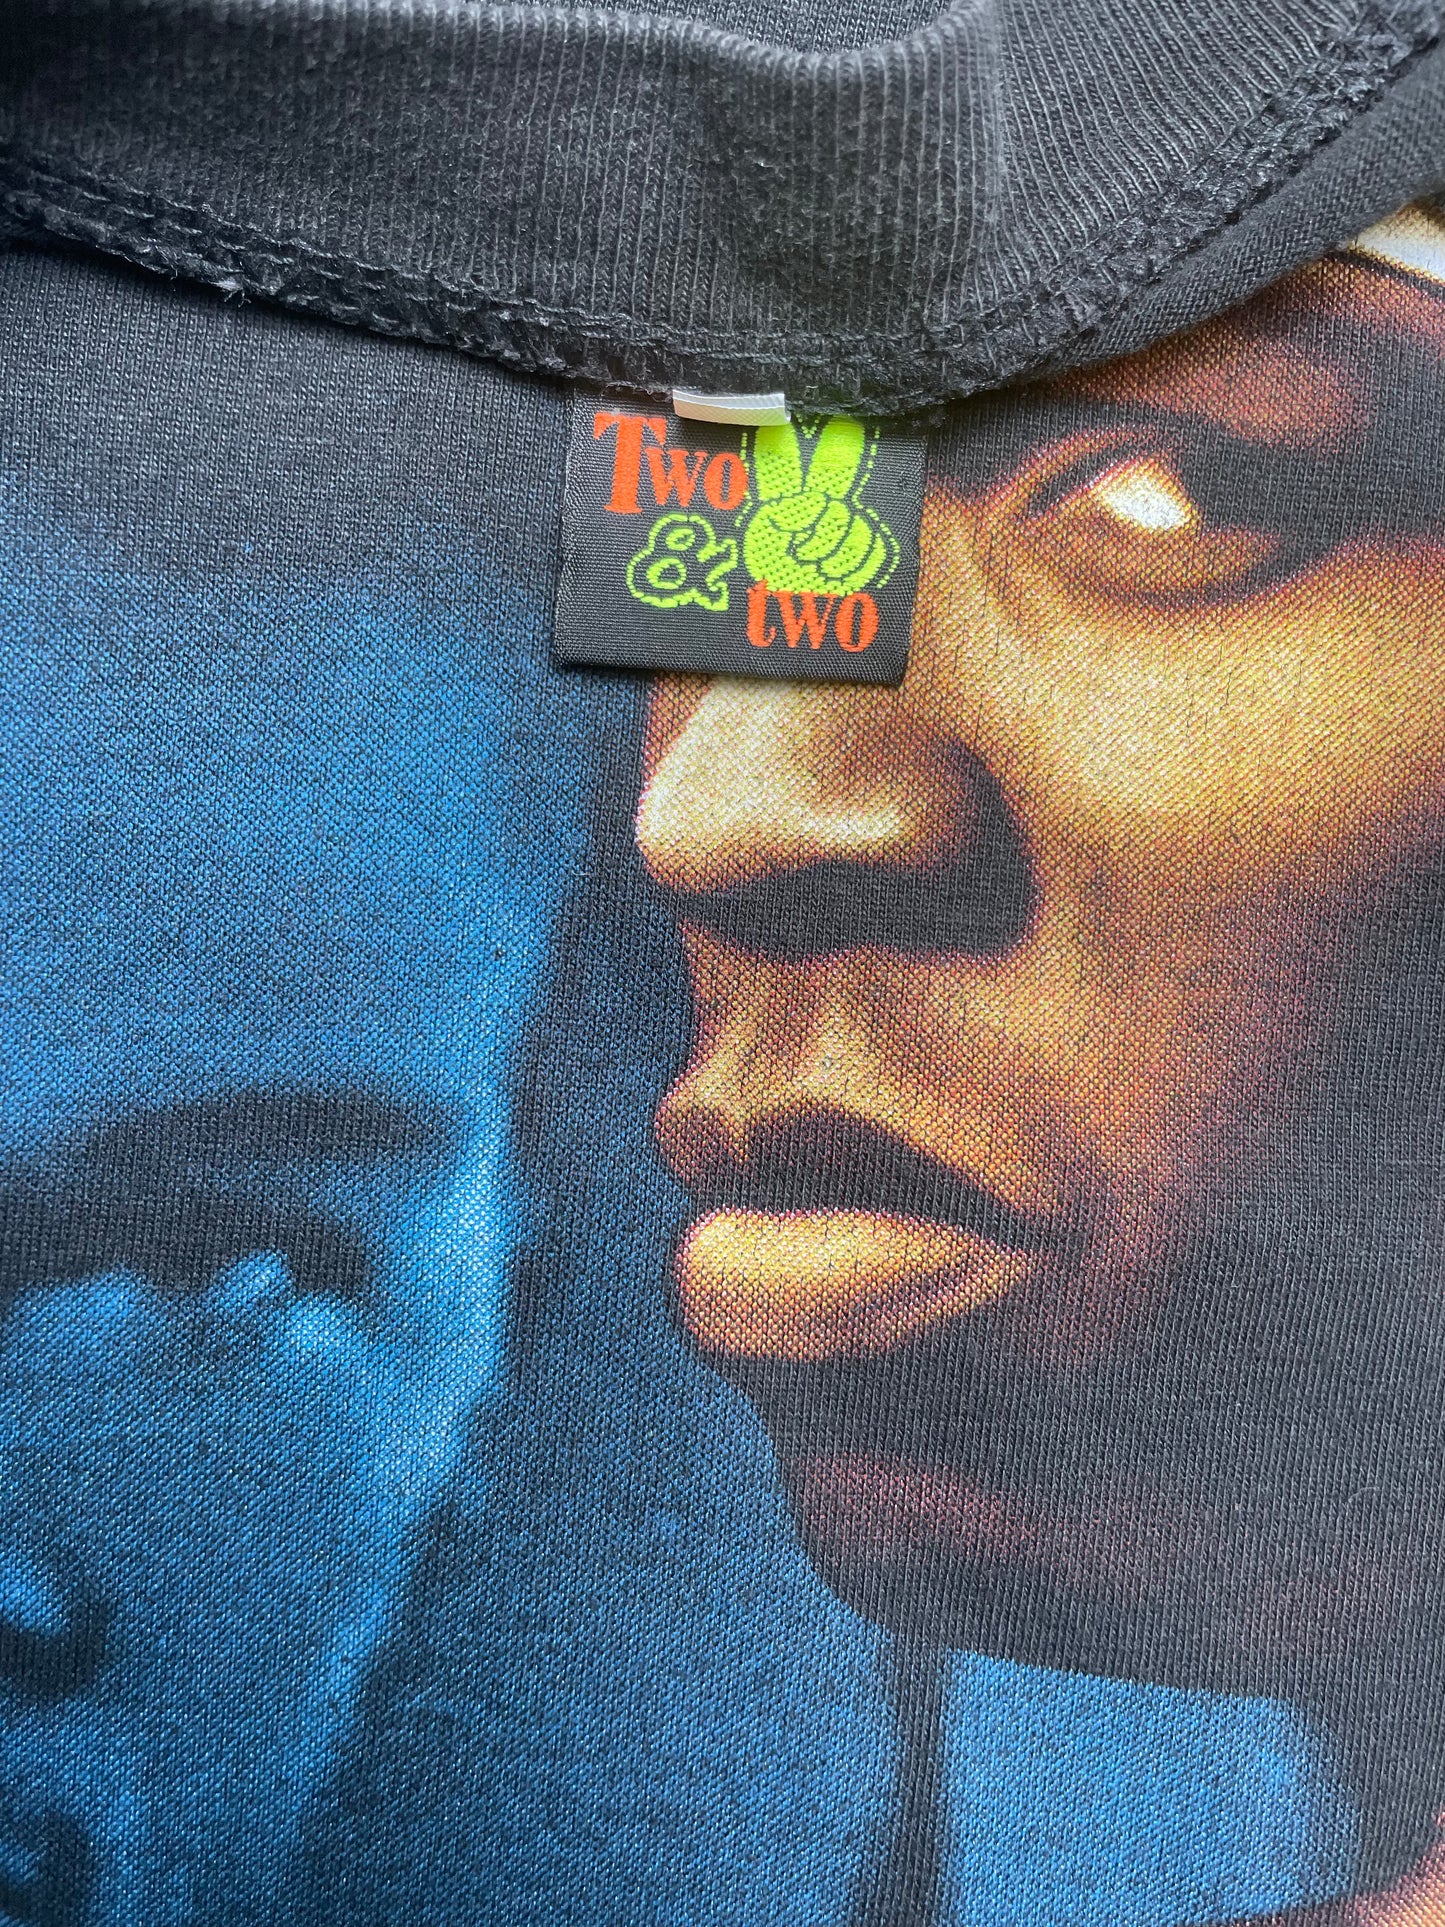 Vintage 90s 50 Cent Rap Tshirt Medium